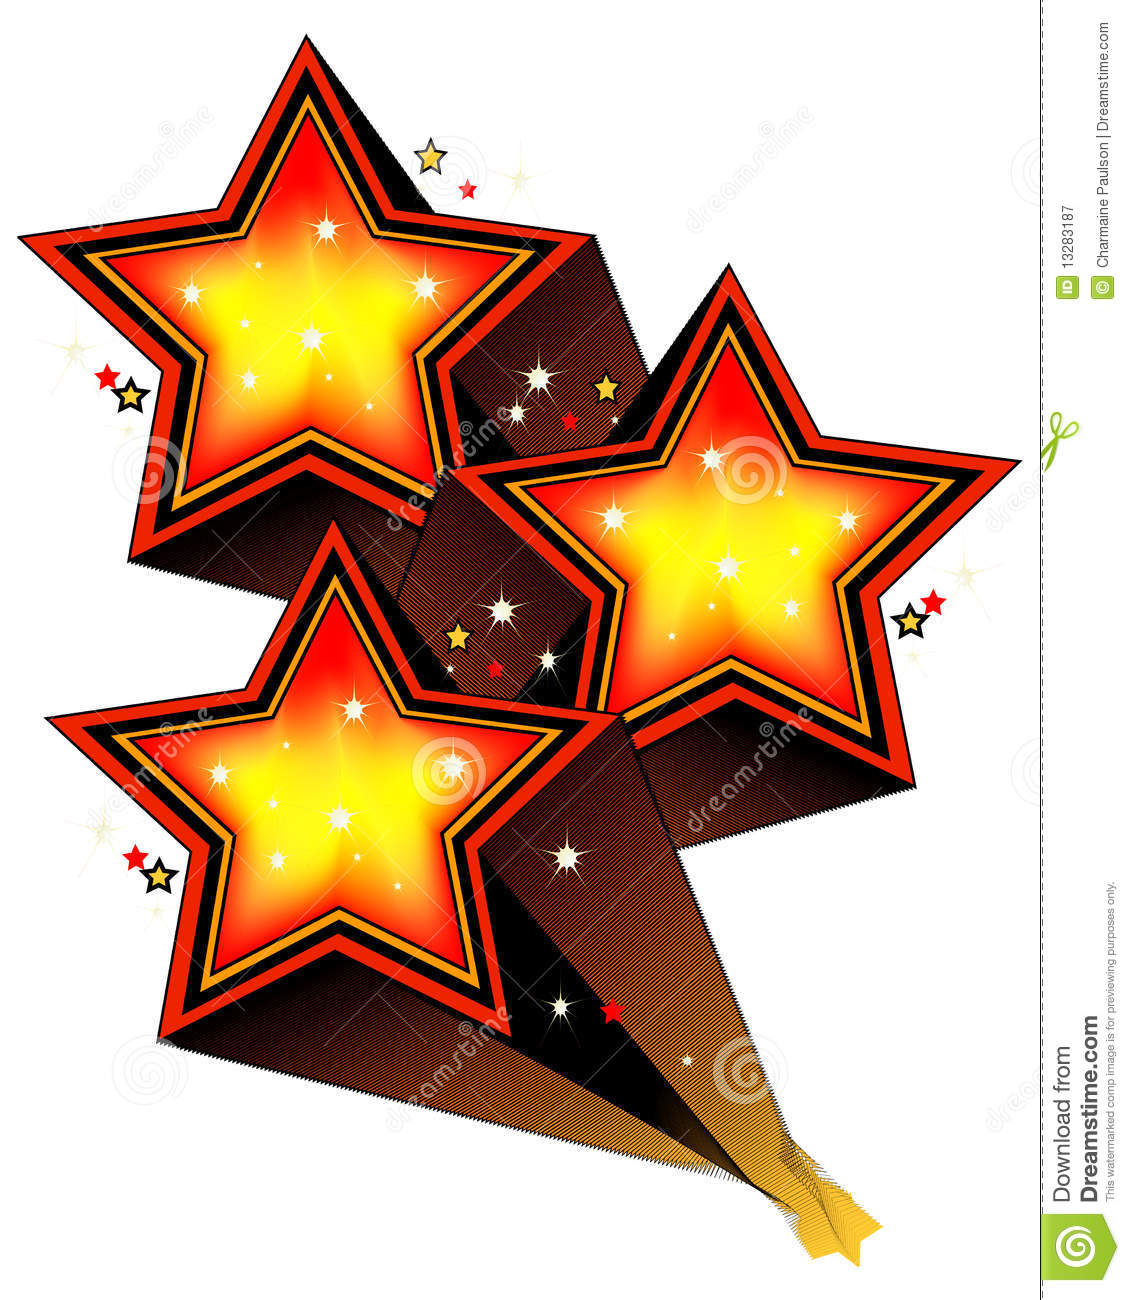 Rising Stars HD wallpapers, Desktop wallpaper - most viewed